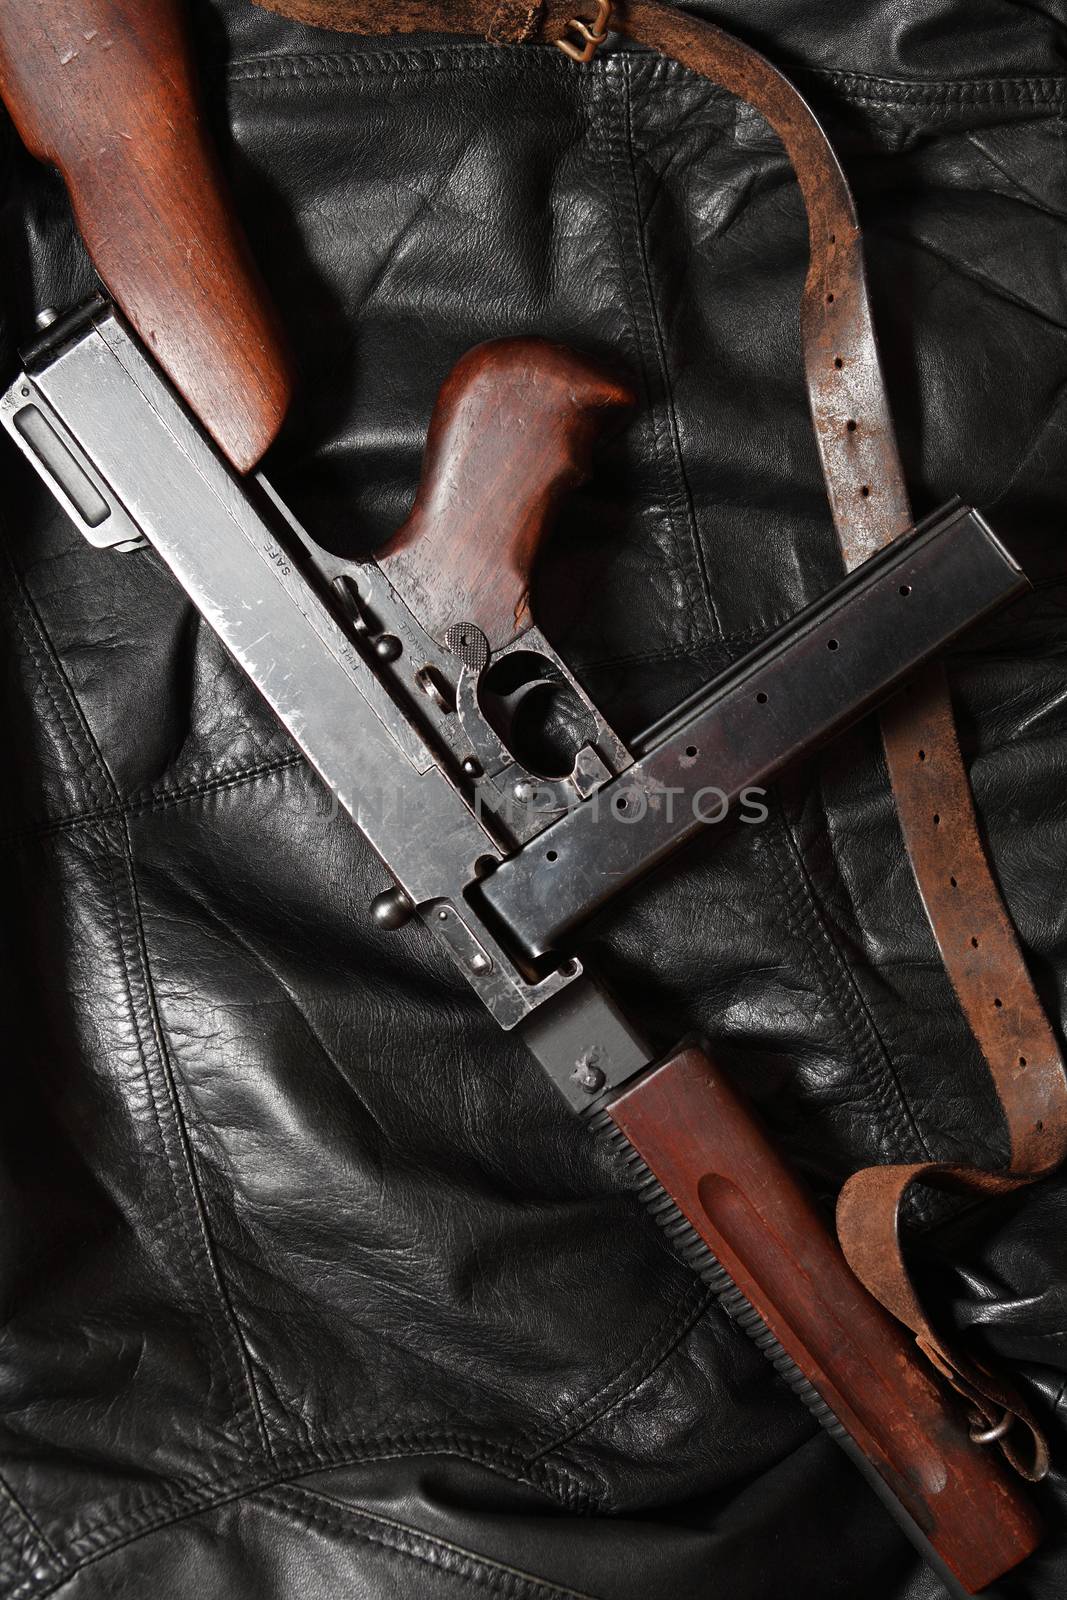 Old USA submachine gun closeup on black leather background